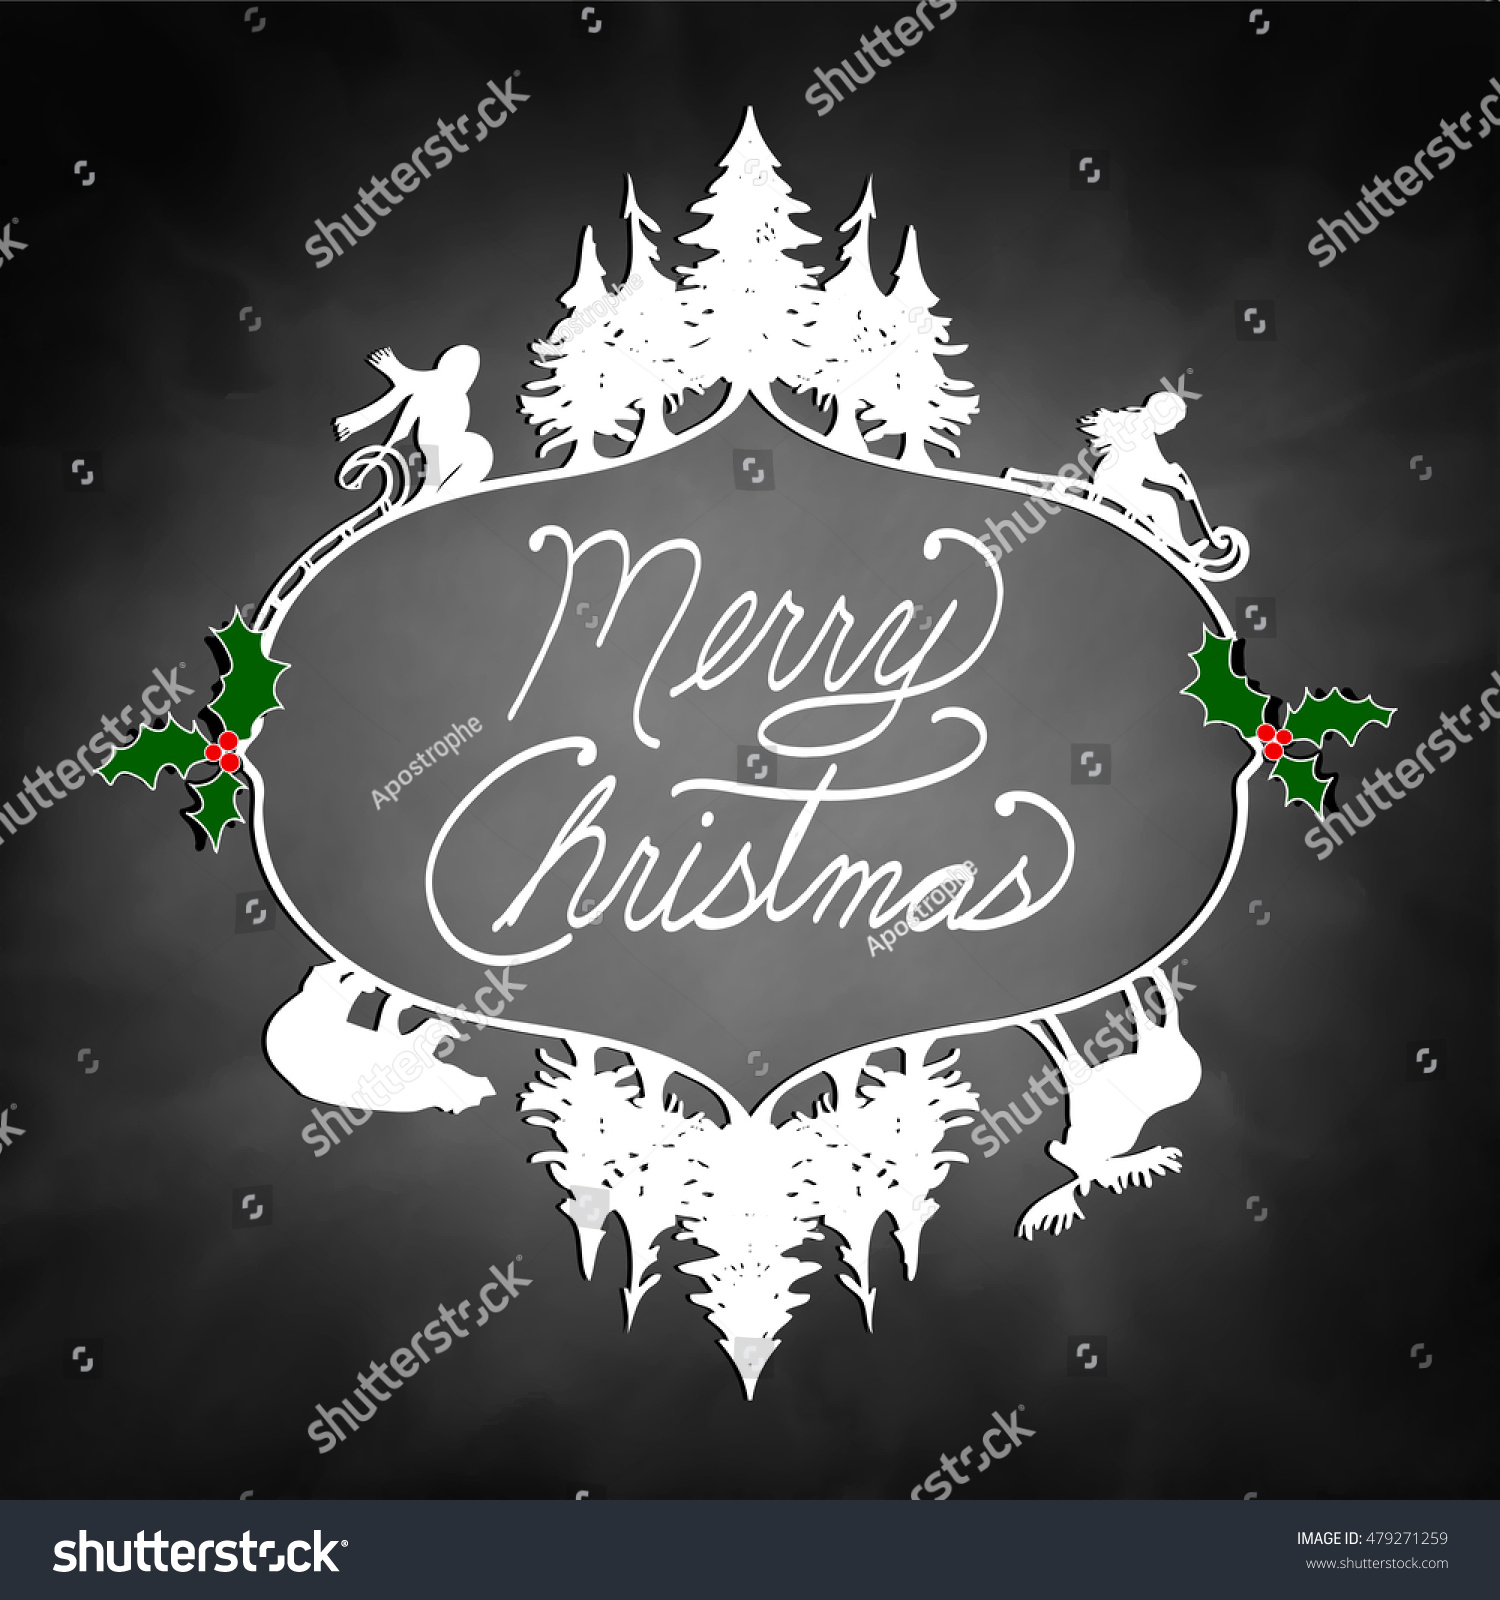 Beautiful Christmas Vector Design Cutout Silhouette Stock Vector ...